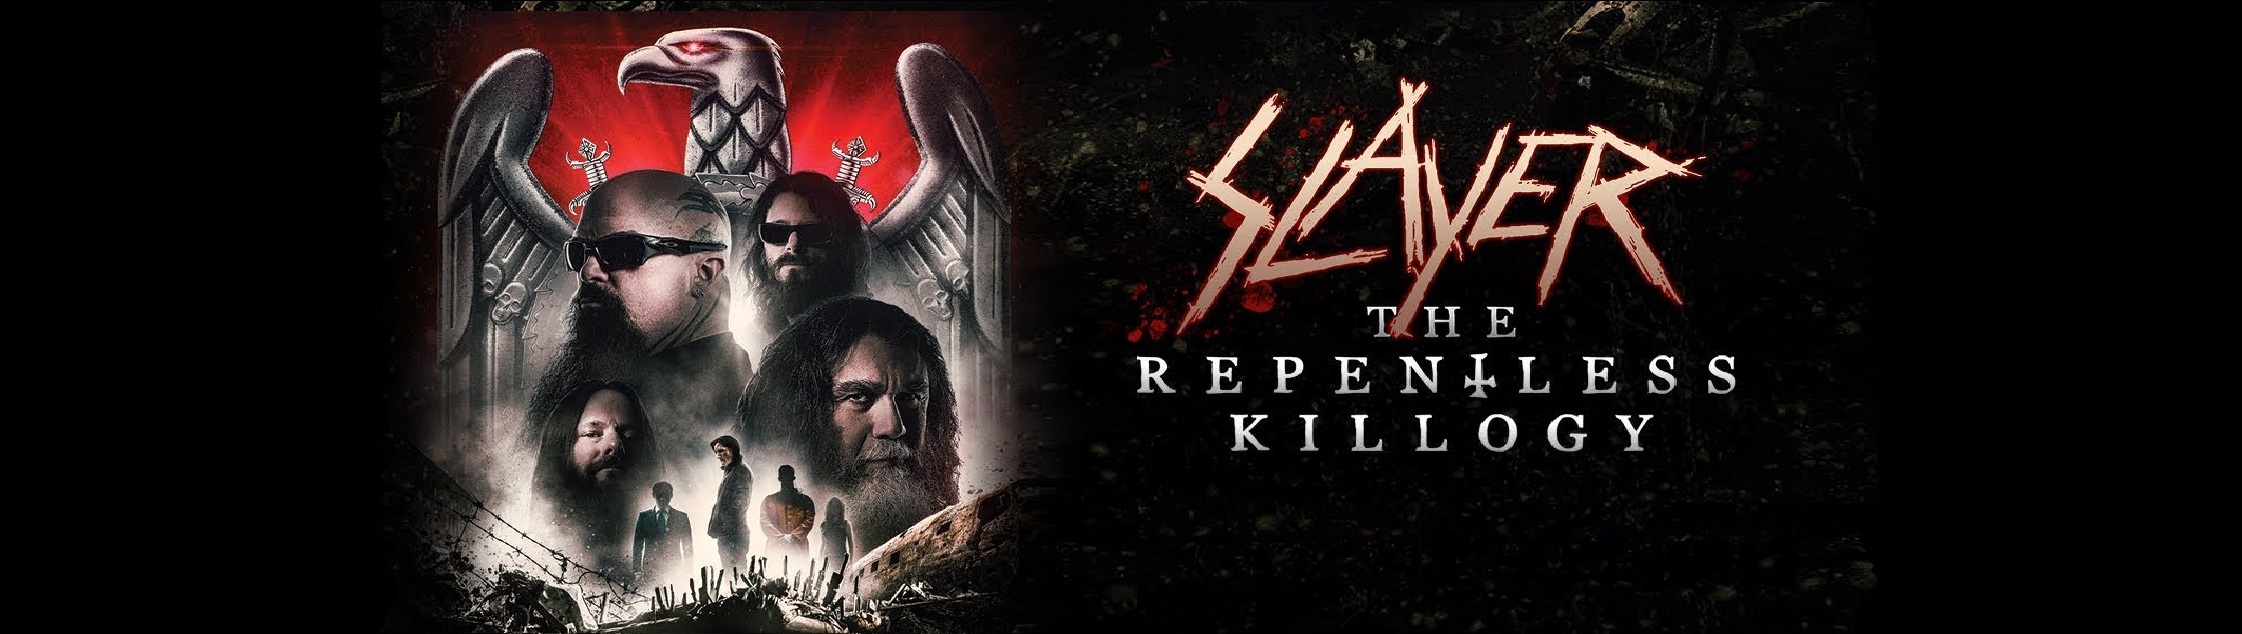 Slayer Repentless Killogy 2019 Long